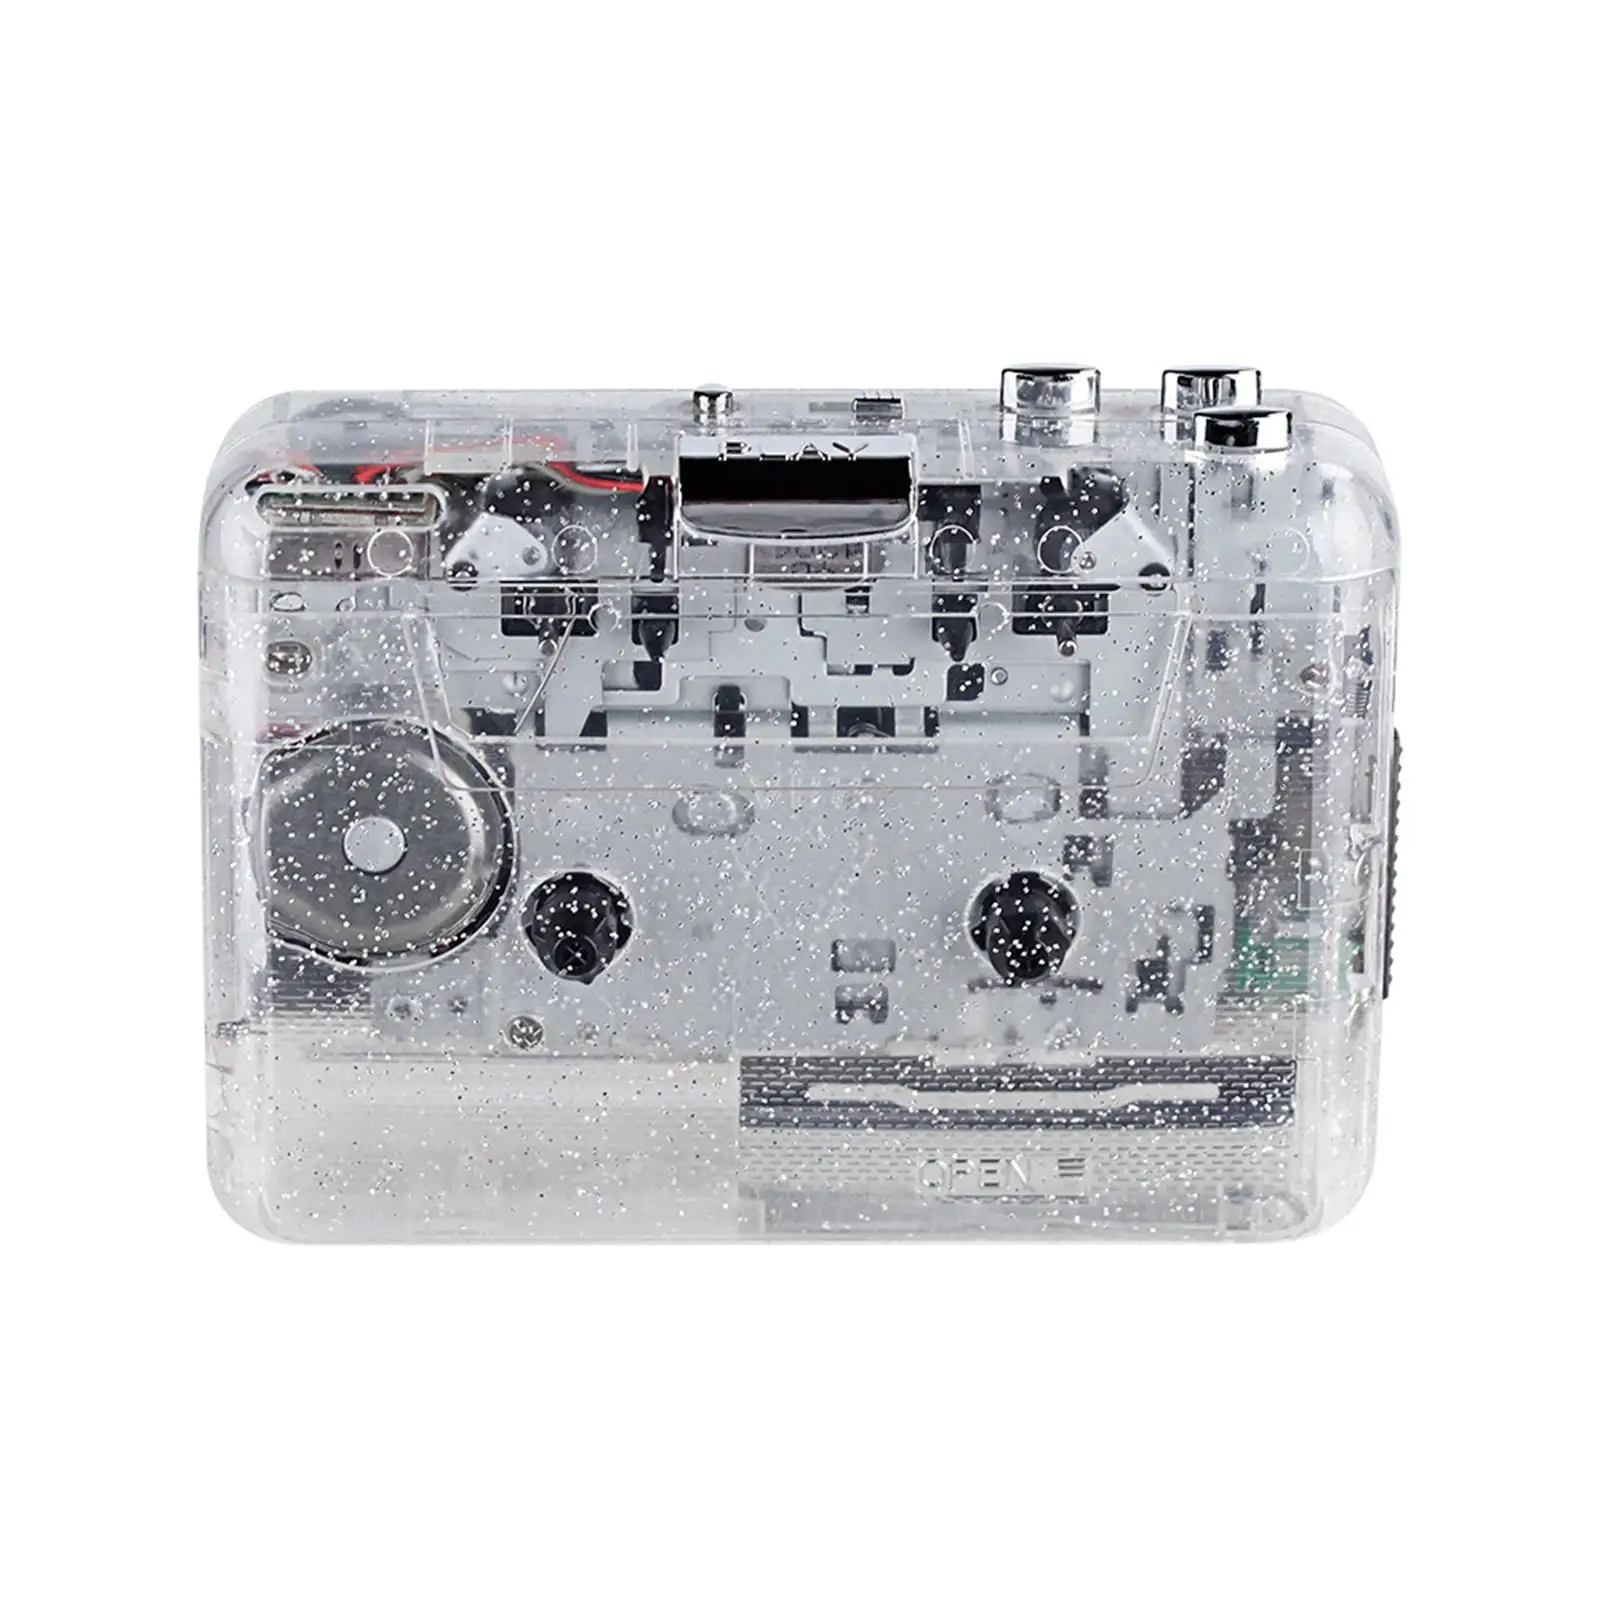 Cassette Player 11x8.1x3.1cm Lightweight Design with Headphones Compact Recorder Audio Music Cassette to MP3 Digital Converter